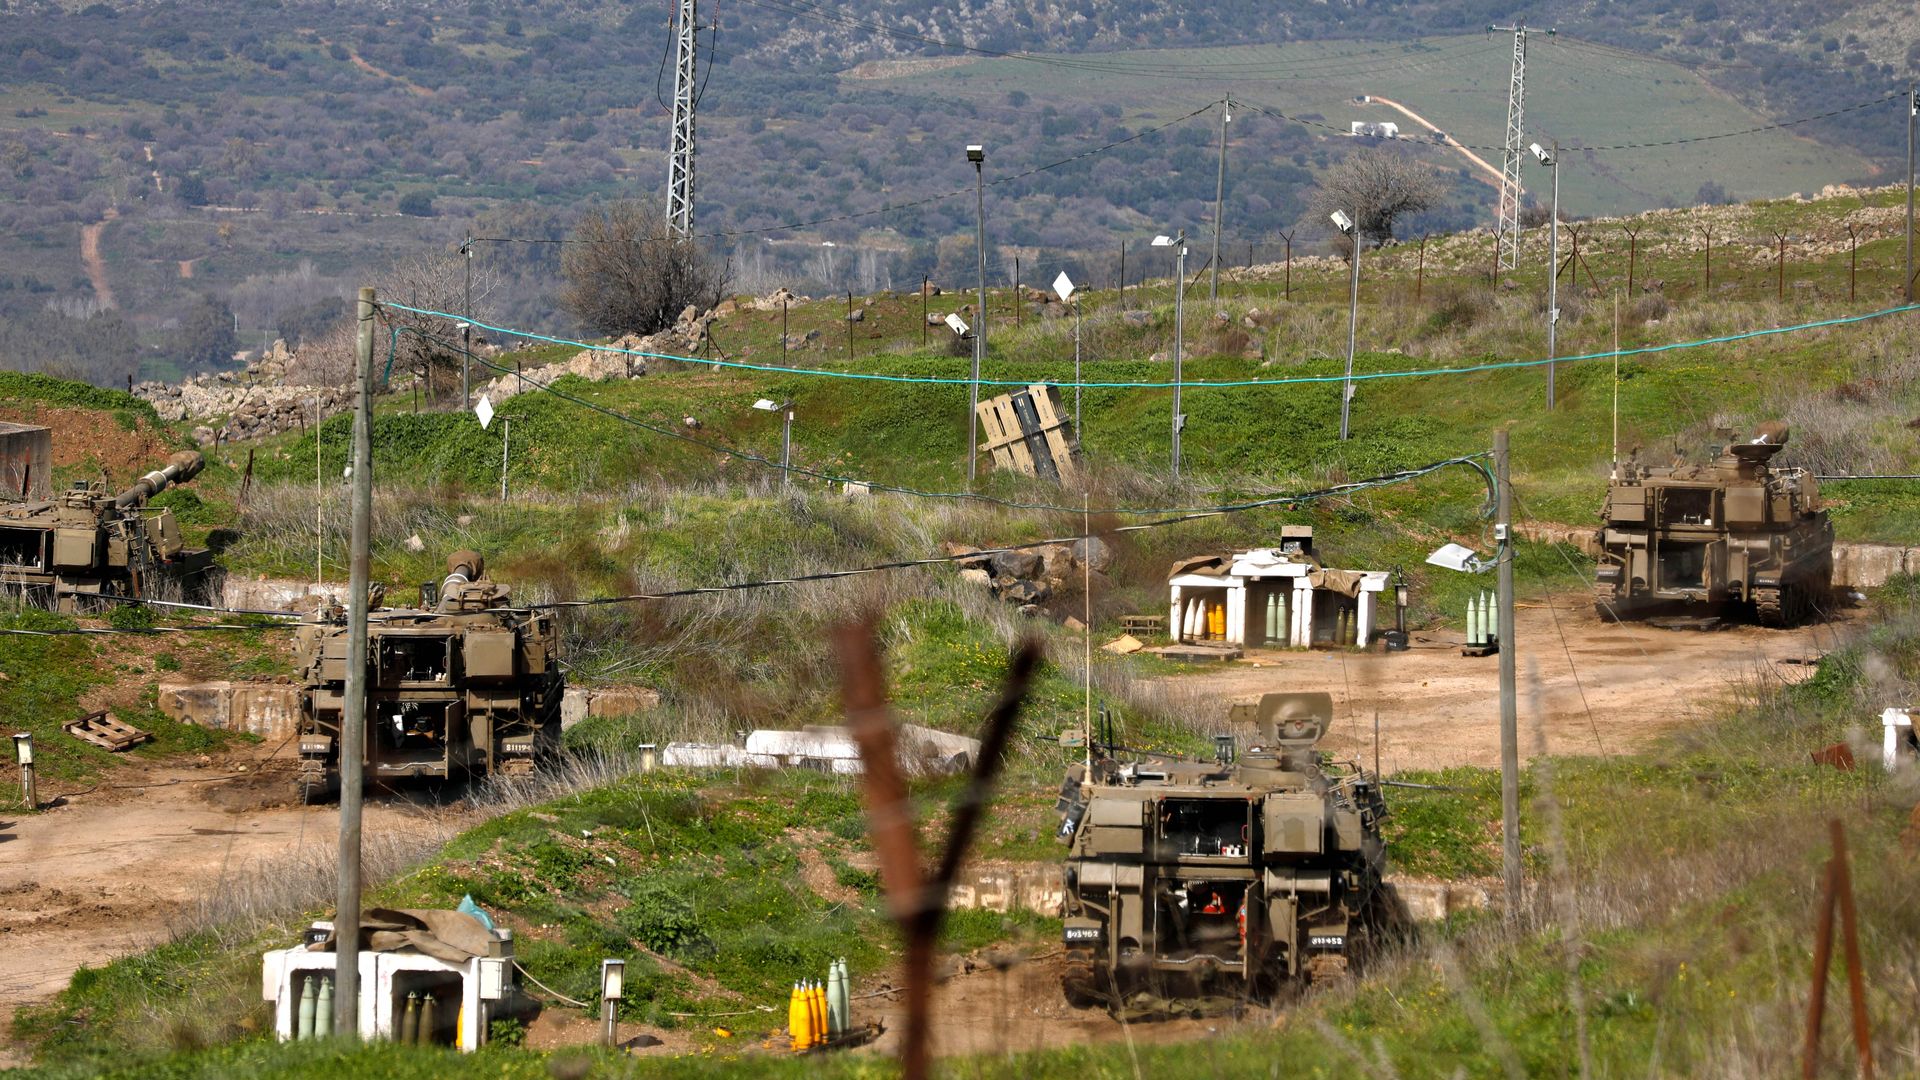 Rockets fired from Lebanon toward Israel in major escalation (axios.com)